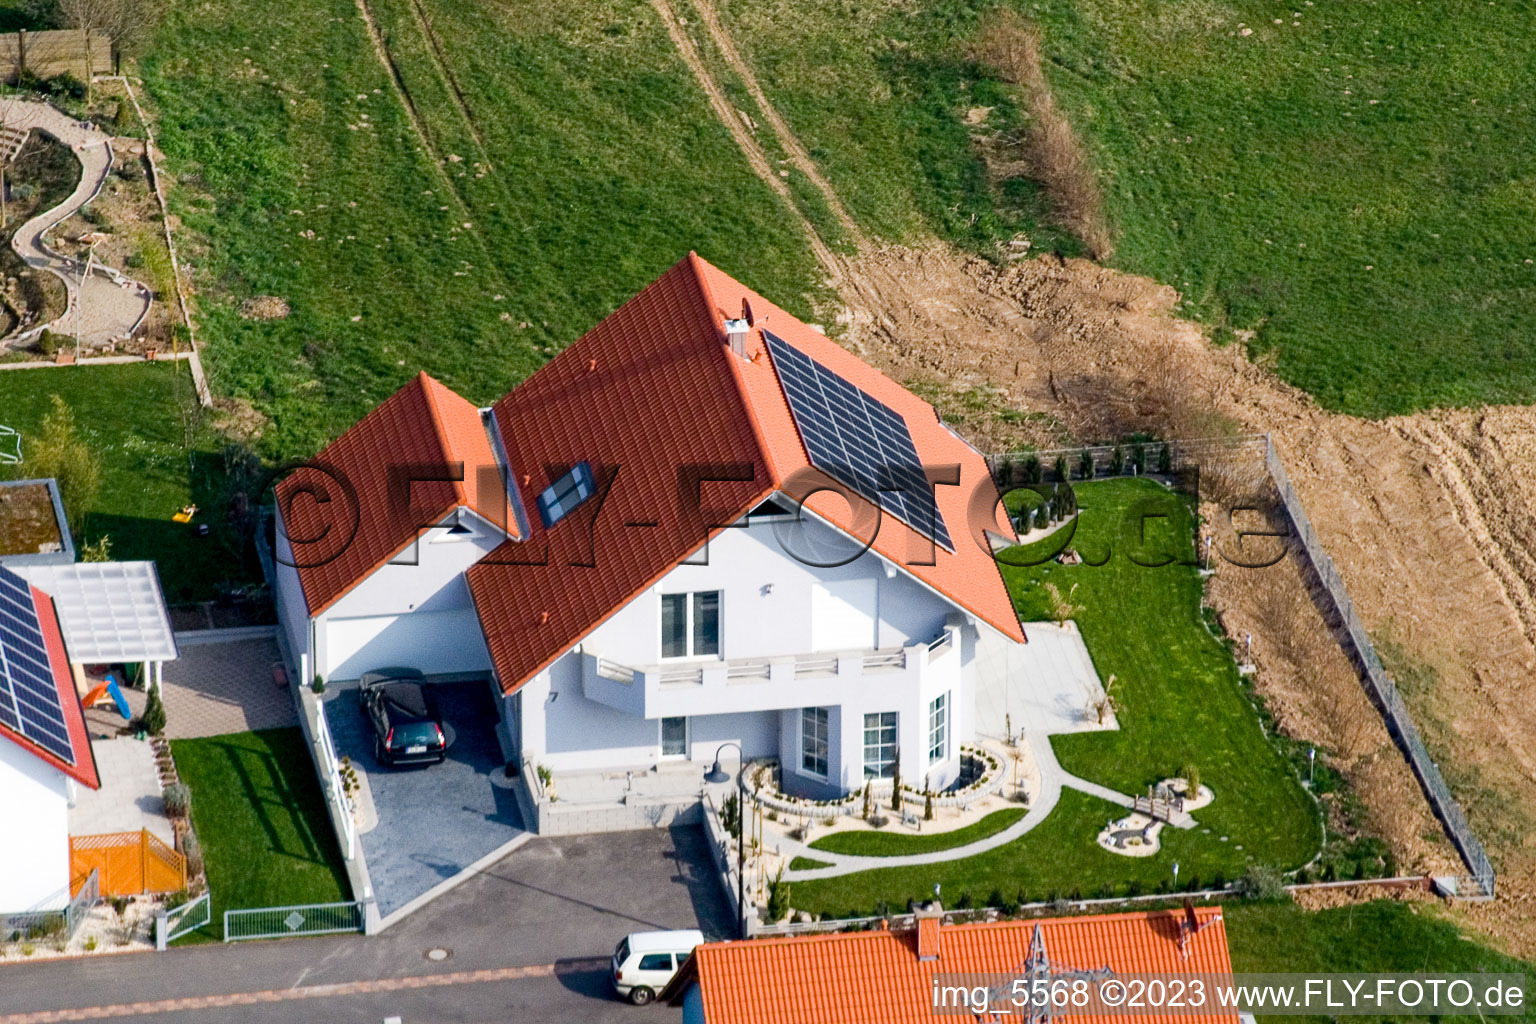 Hergersweiler dans le département Rhénanie-Palatinat, Allemagne vu d'un drone